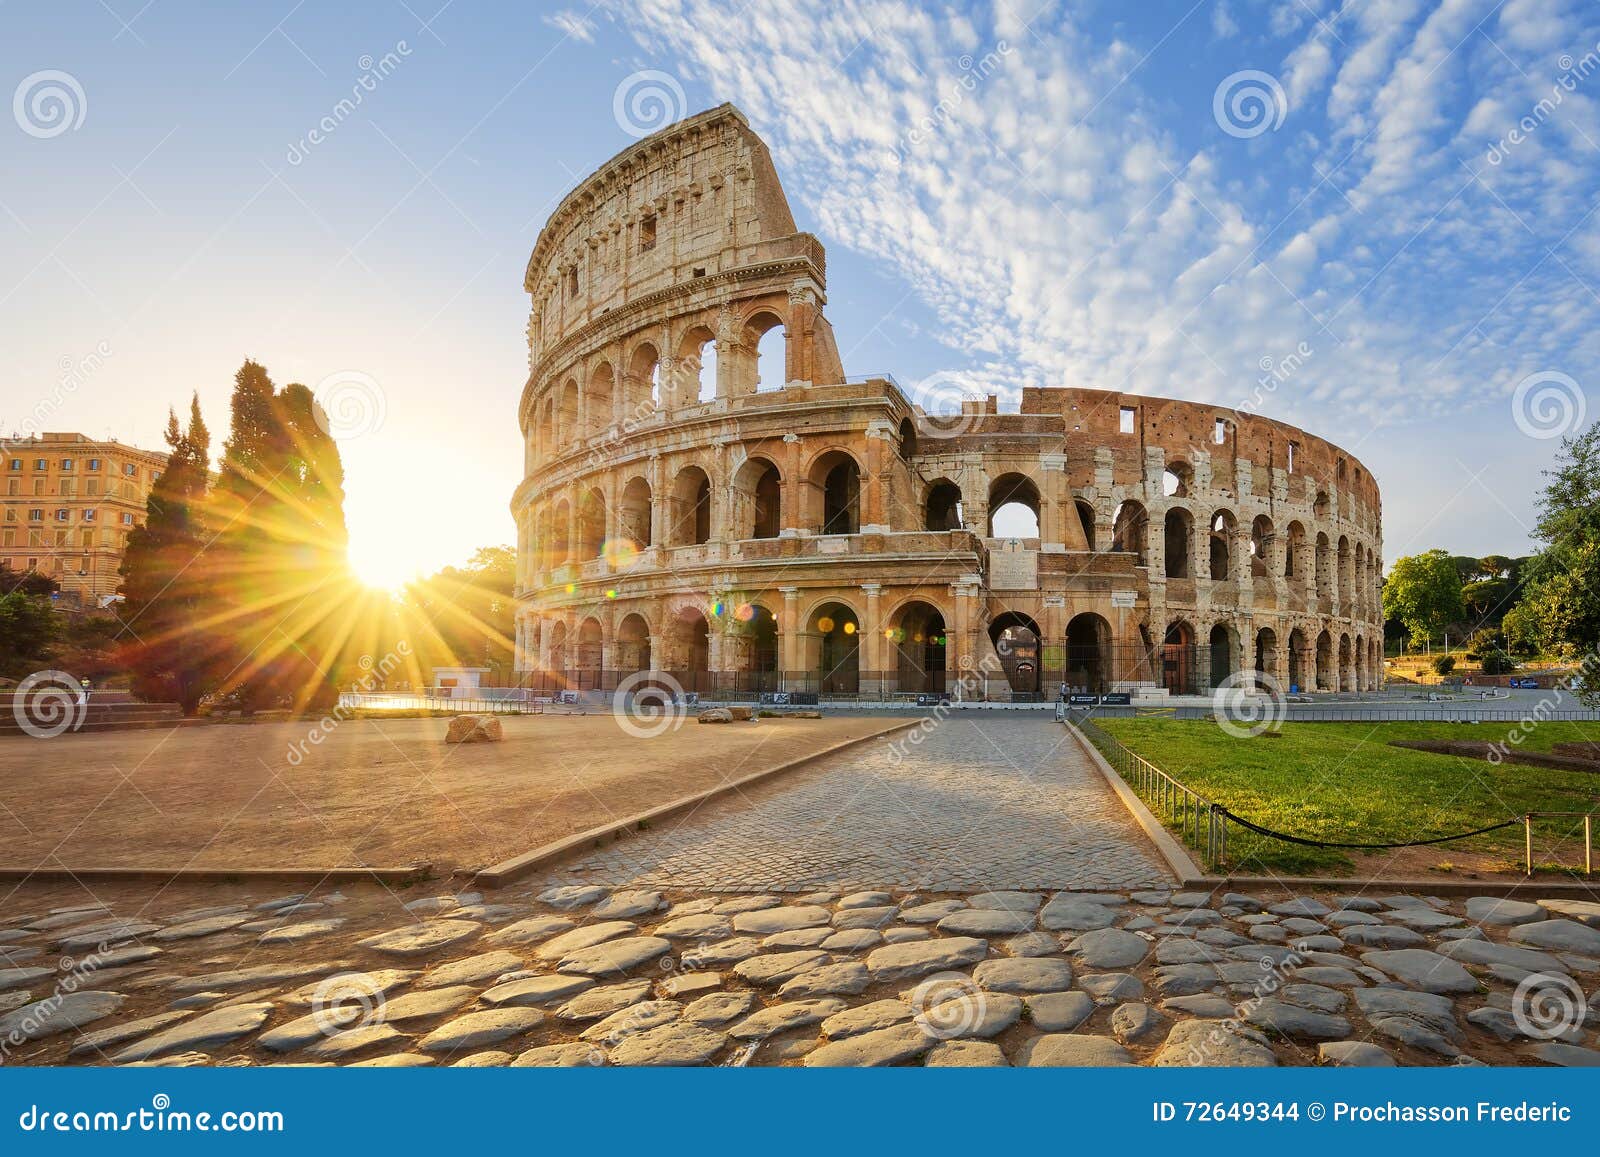 Mening van Colosseum in Rome en ochtendzon, Italië, Europa